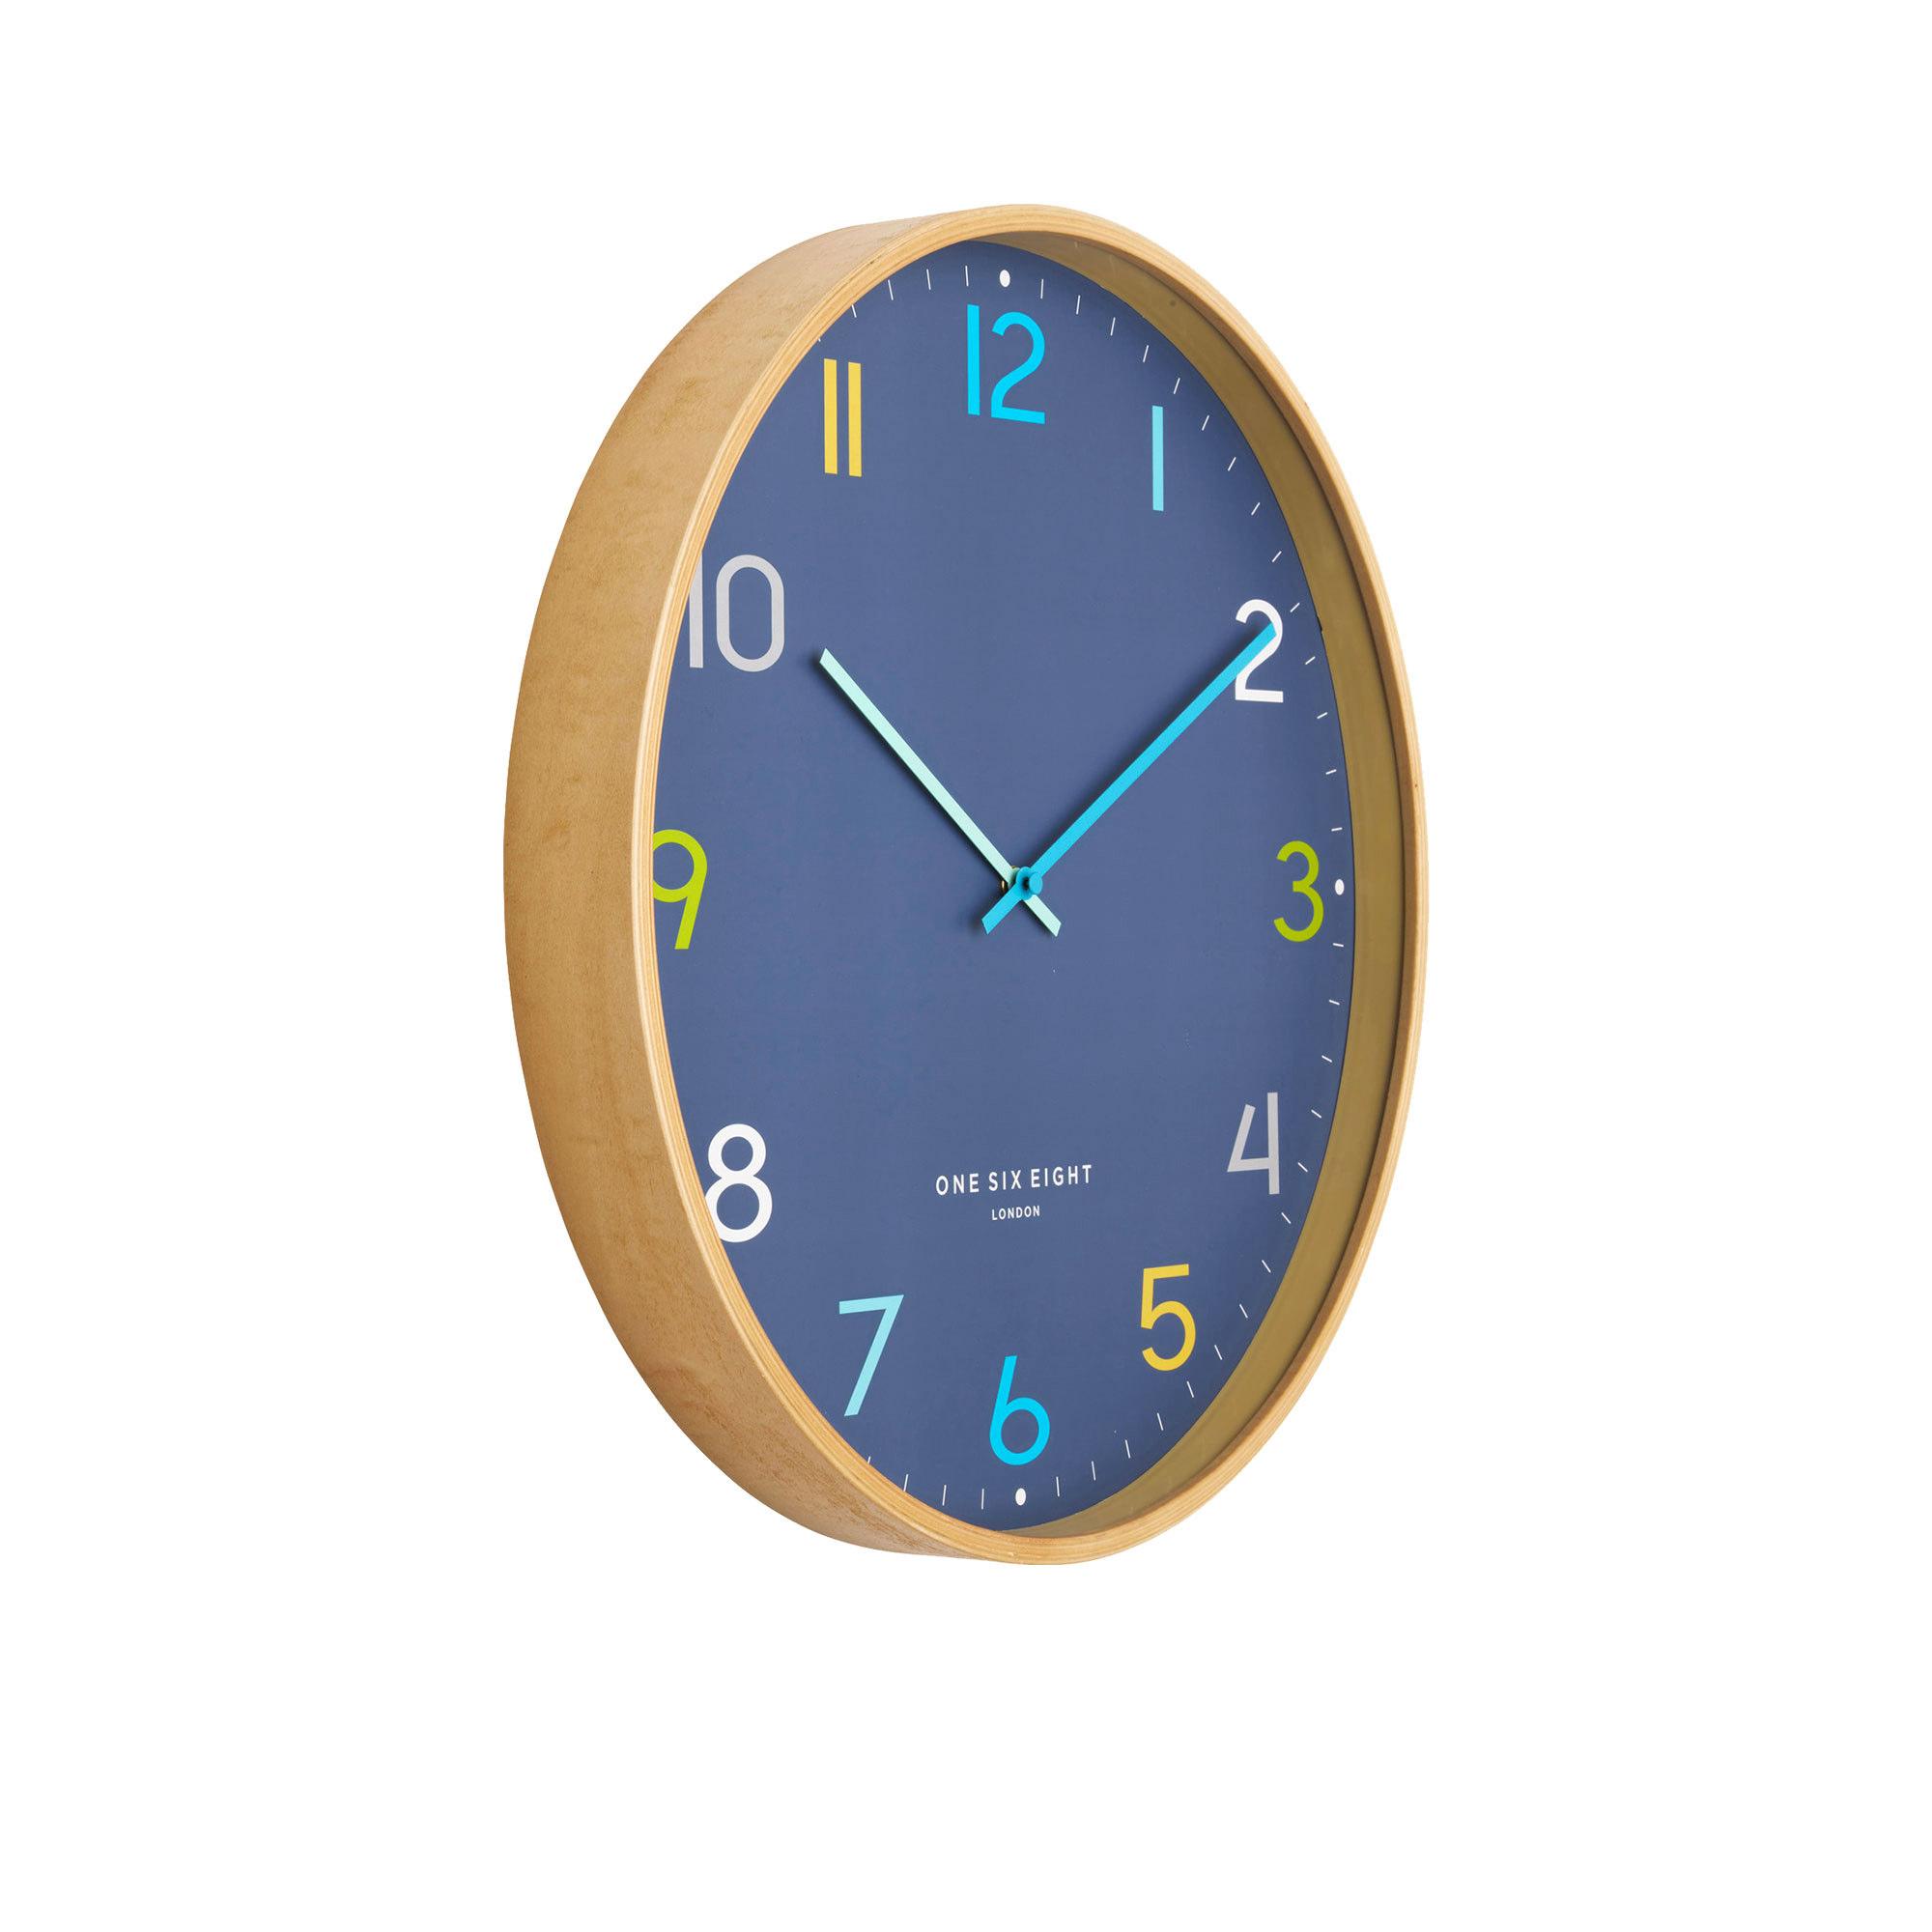 One Six Eight London Dream Wall Clock 41cm Navy Image 2